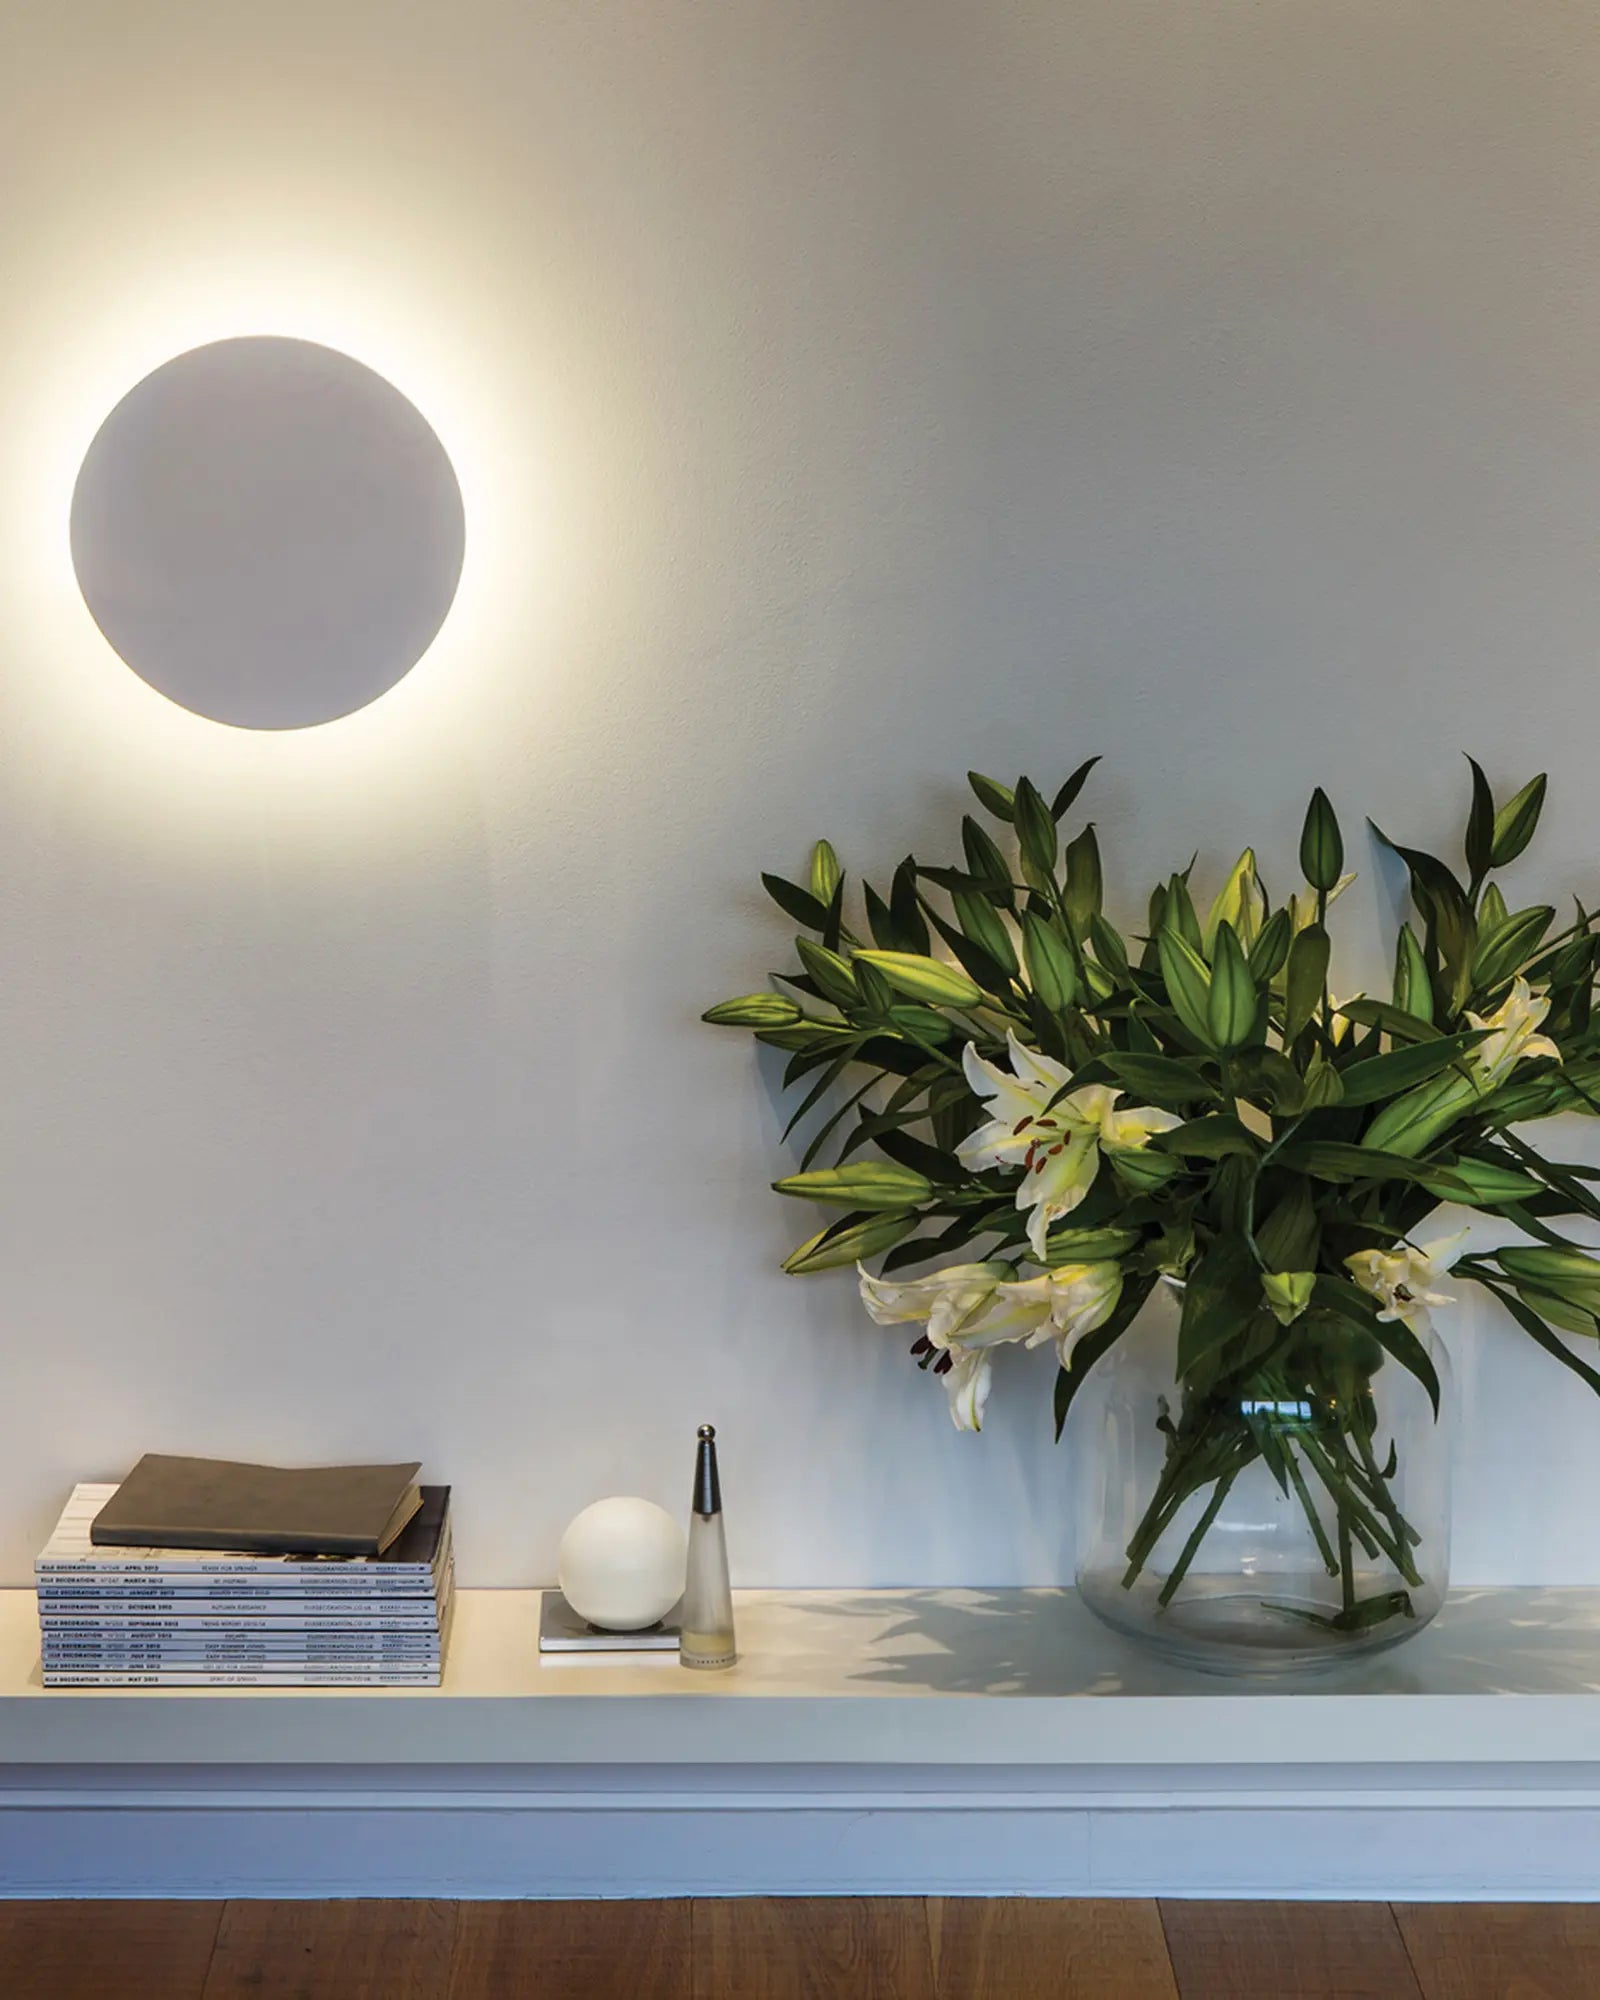 Eclipse round minimal plaster wall light above a shelf